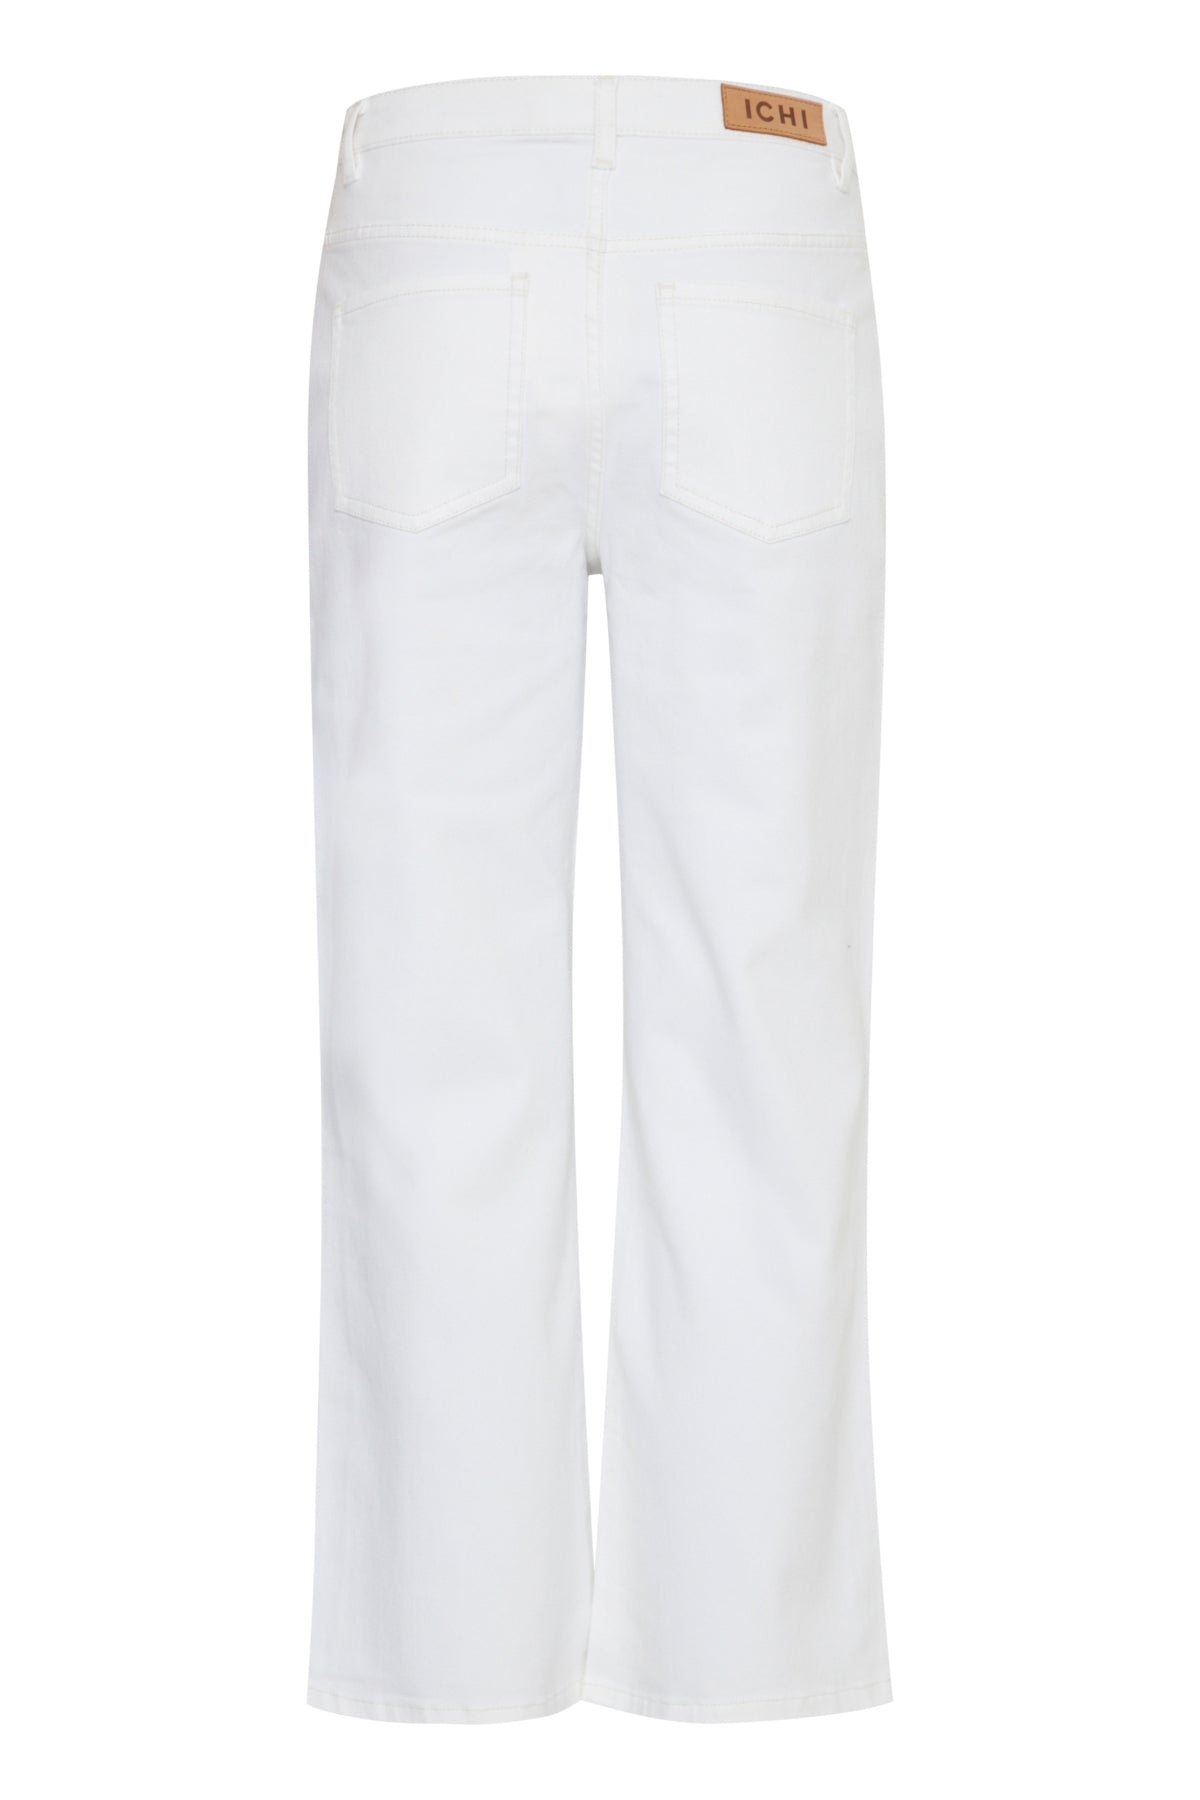 IhZiggie Jeans Blanc de Blanc